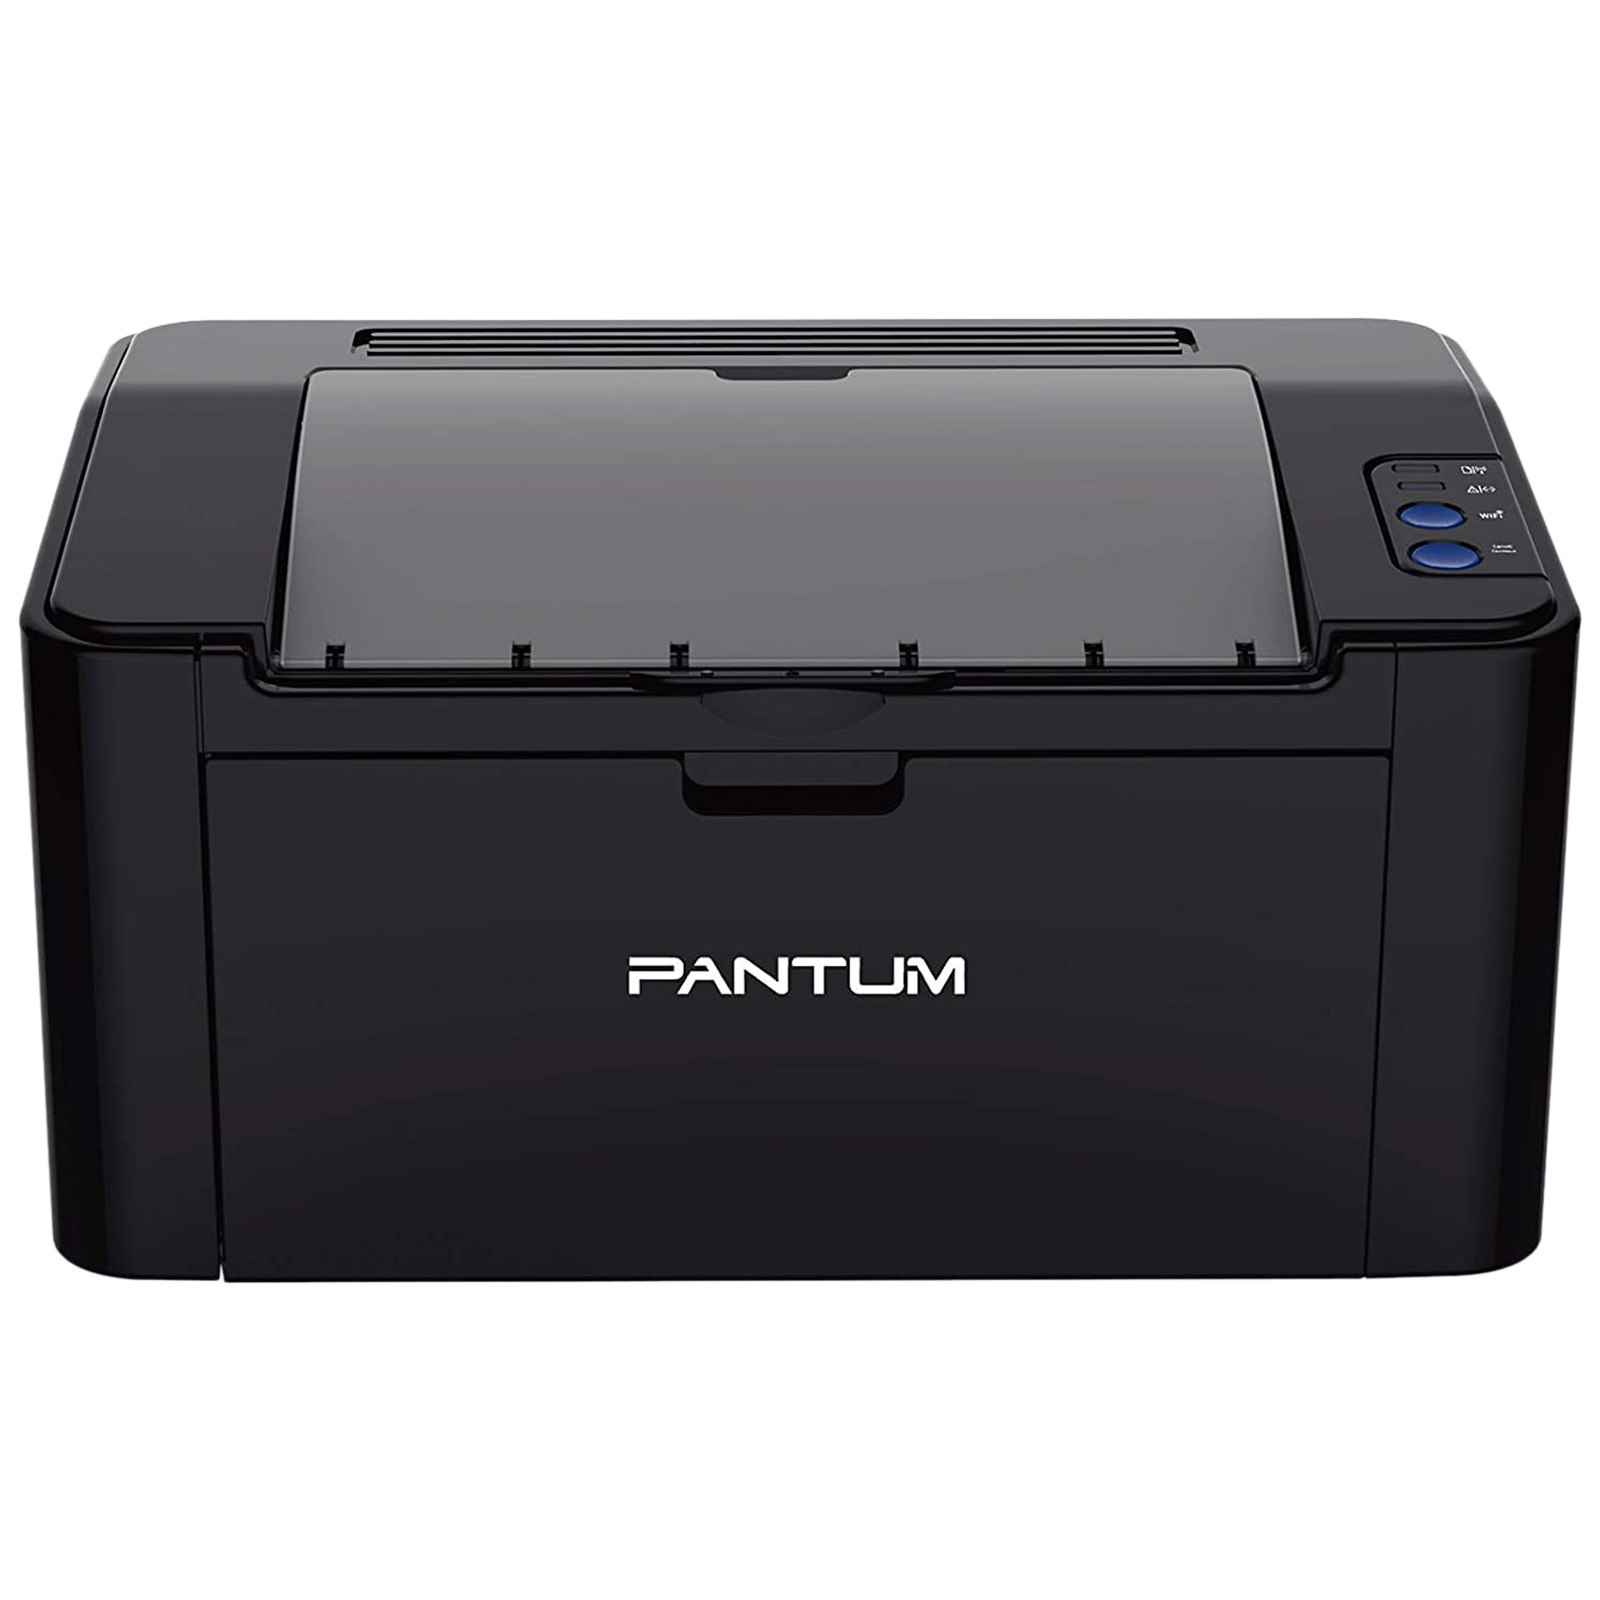 PANTUM Wireless Black & White Single-Function Laserjet Printer (Auto Duplex, P2518W, Black)